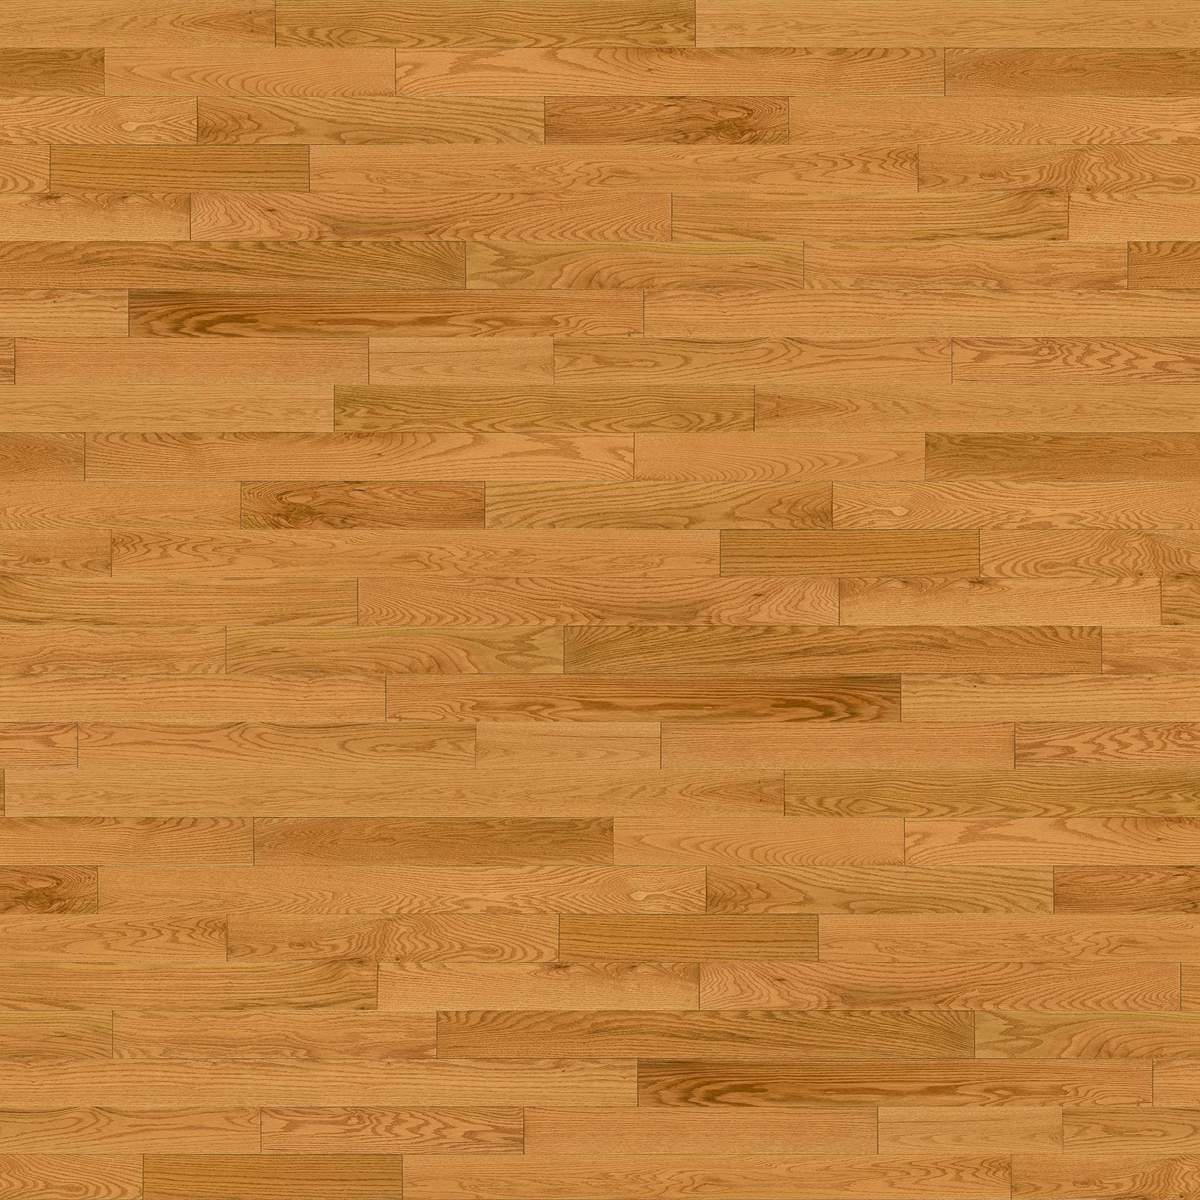 Prestige Hardwood Flooring, Oak Hardwood Flooring 3 1 4